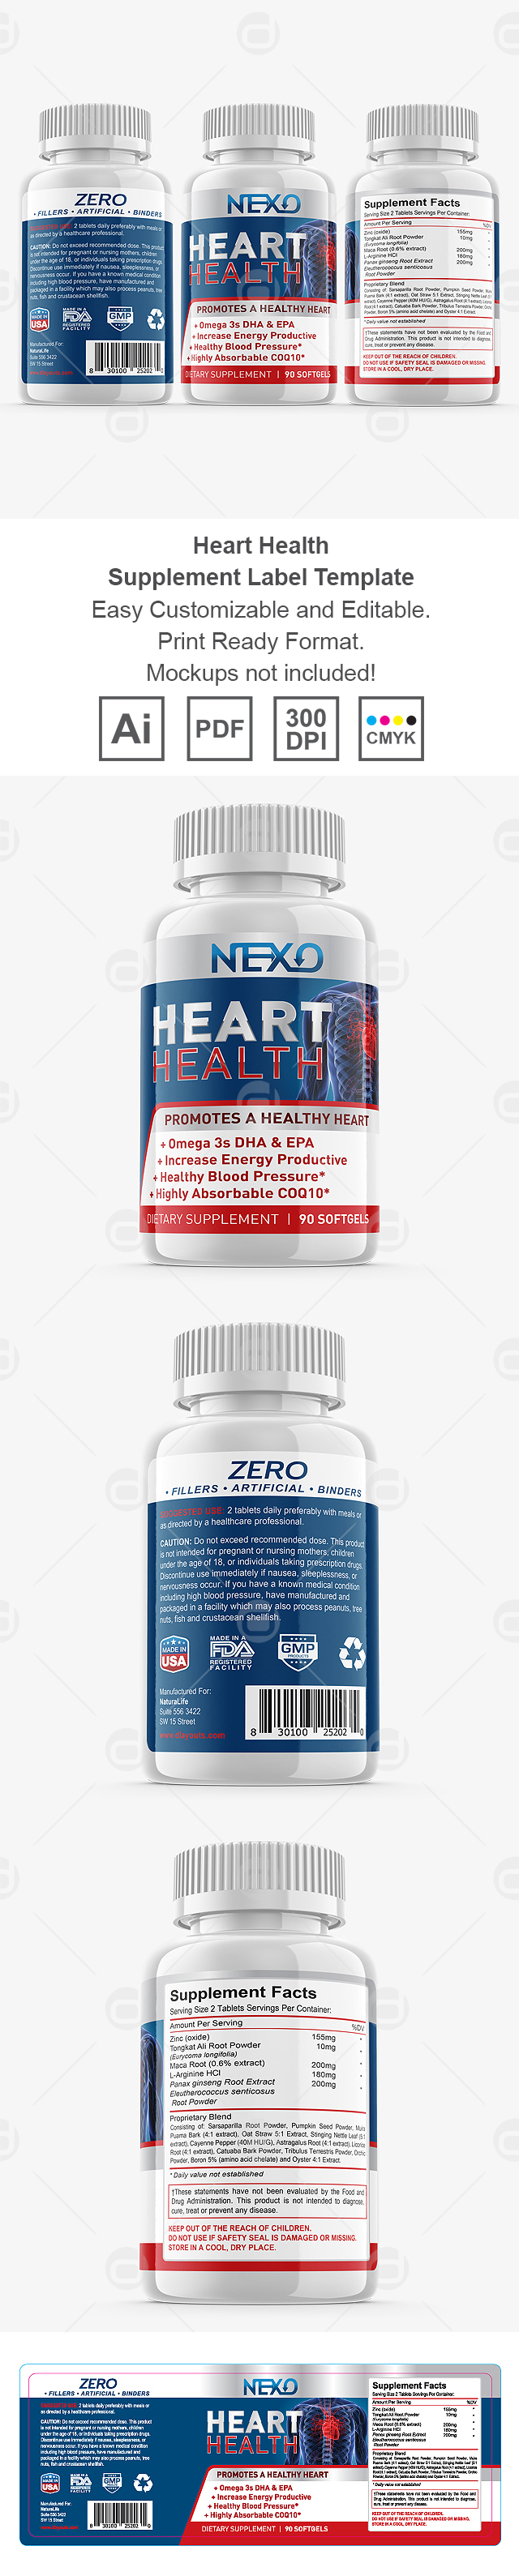 Heart Health Supplement Label Template